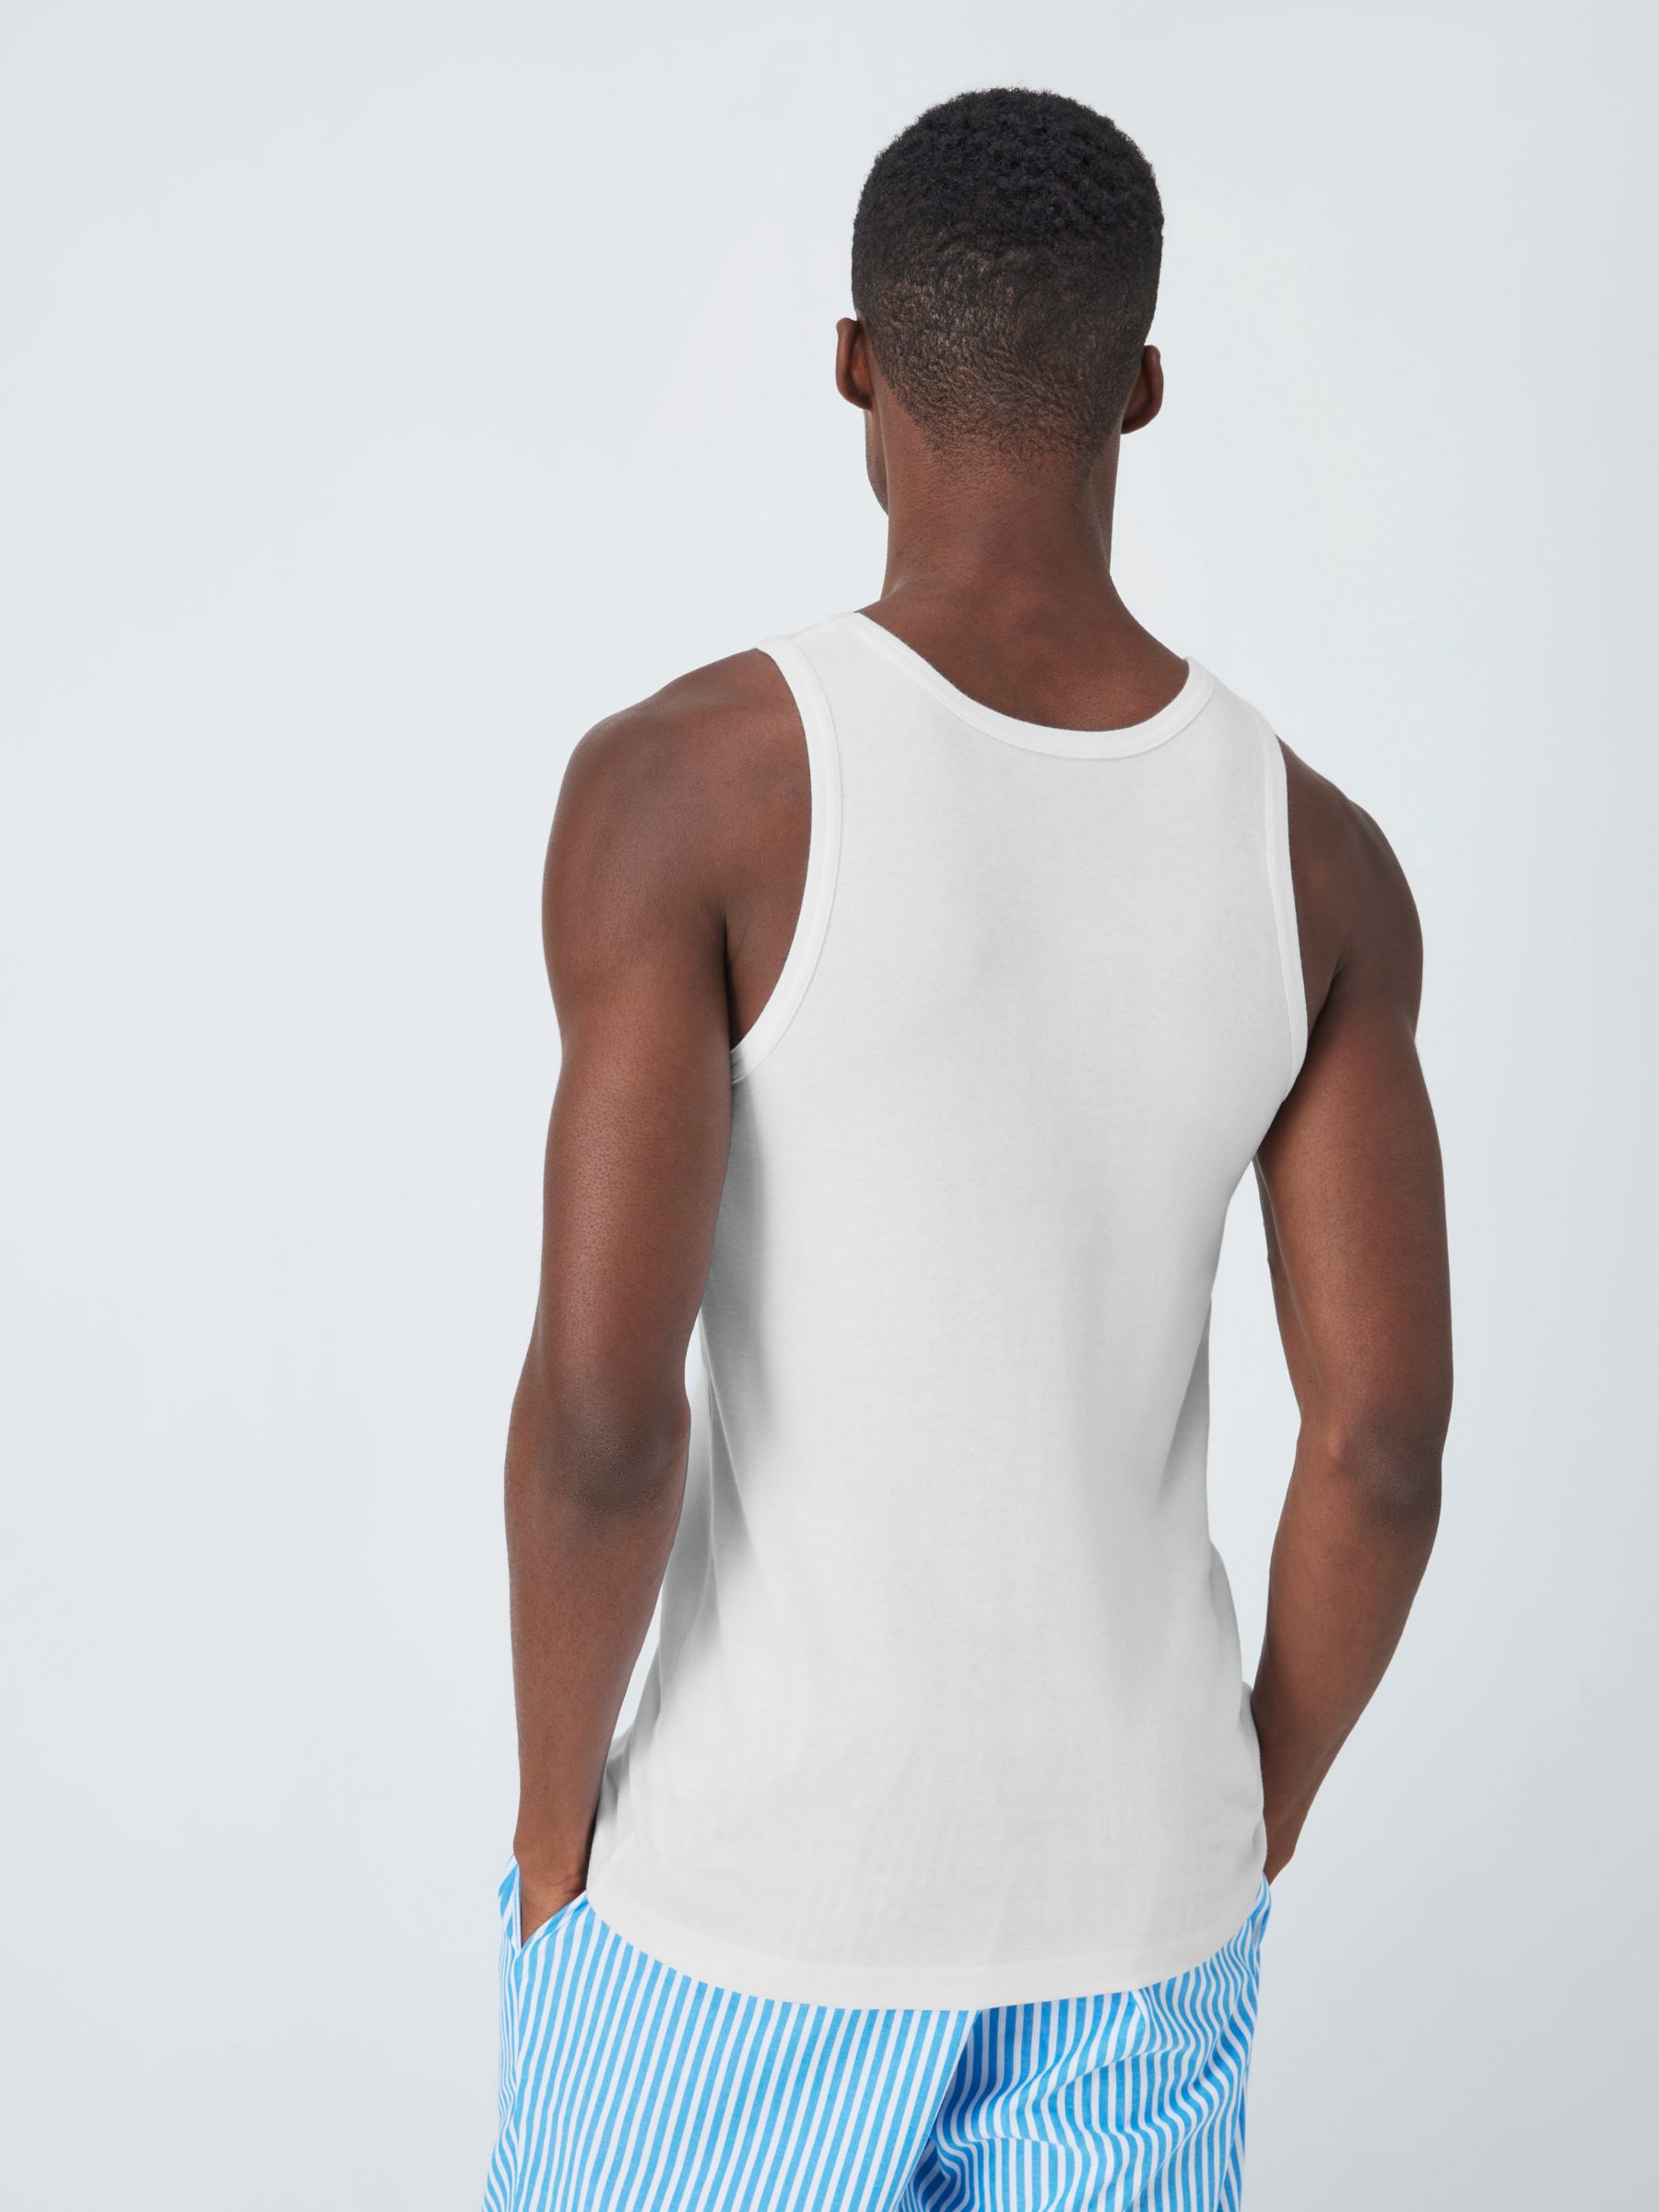 John Lewis Organic Cotton Vest, Pack of 2, White, S